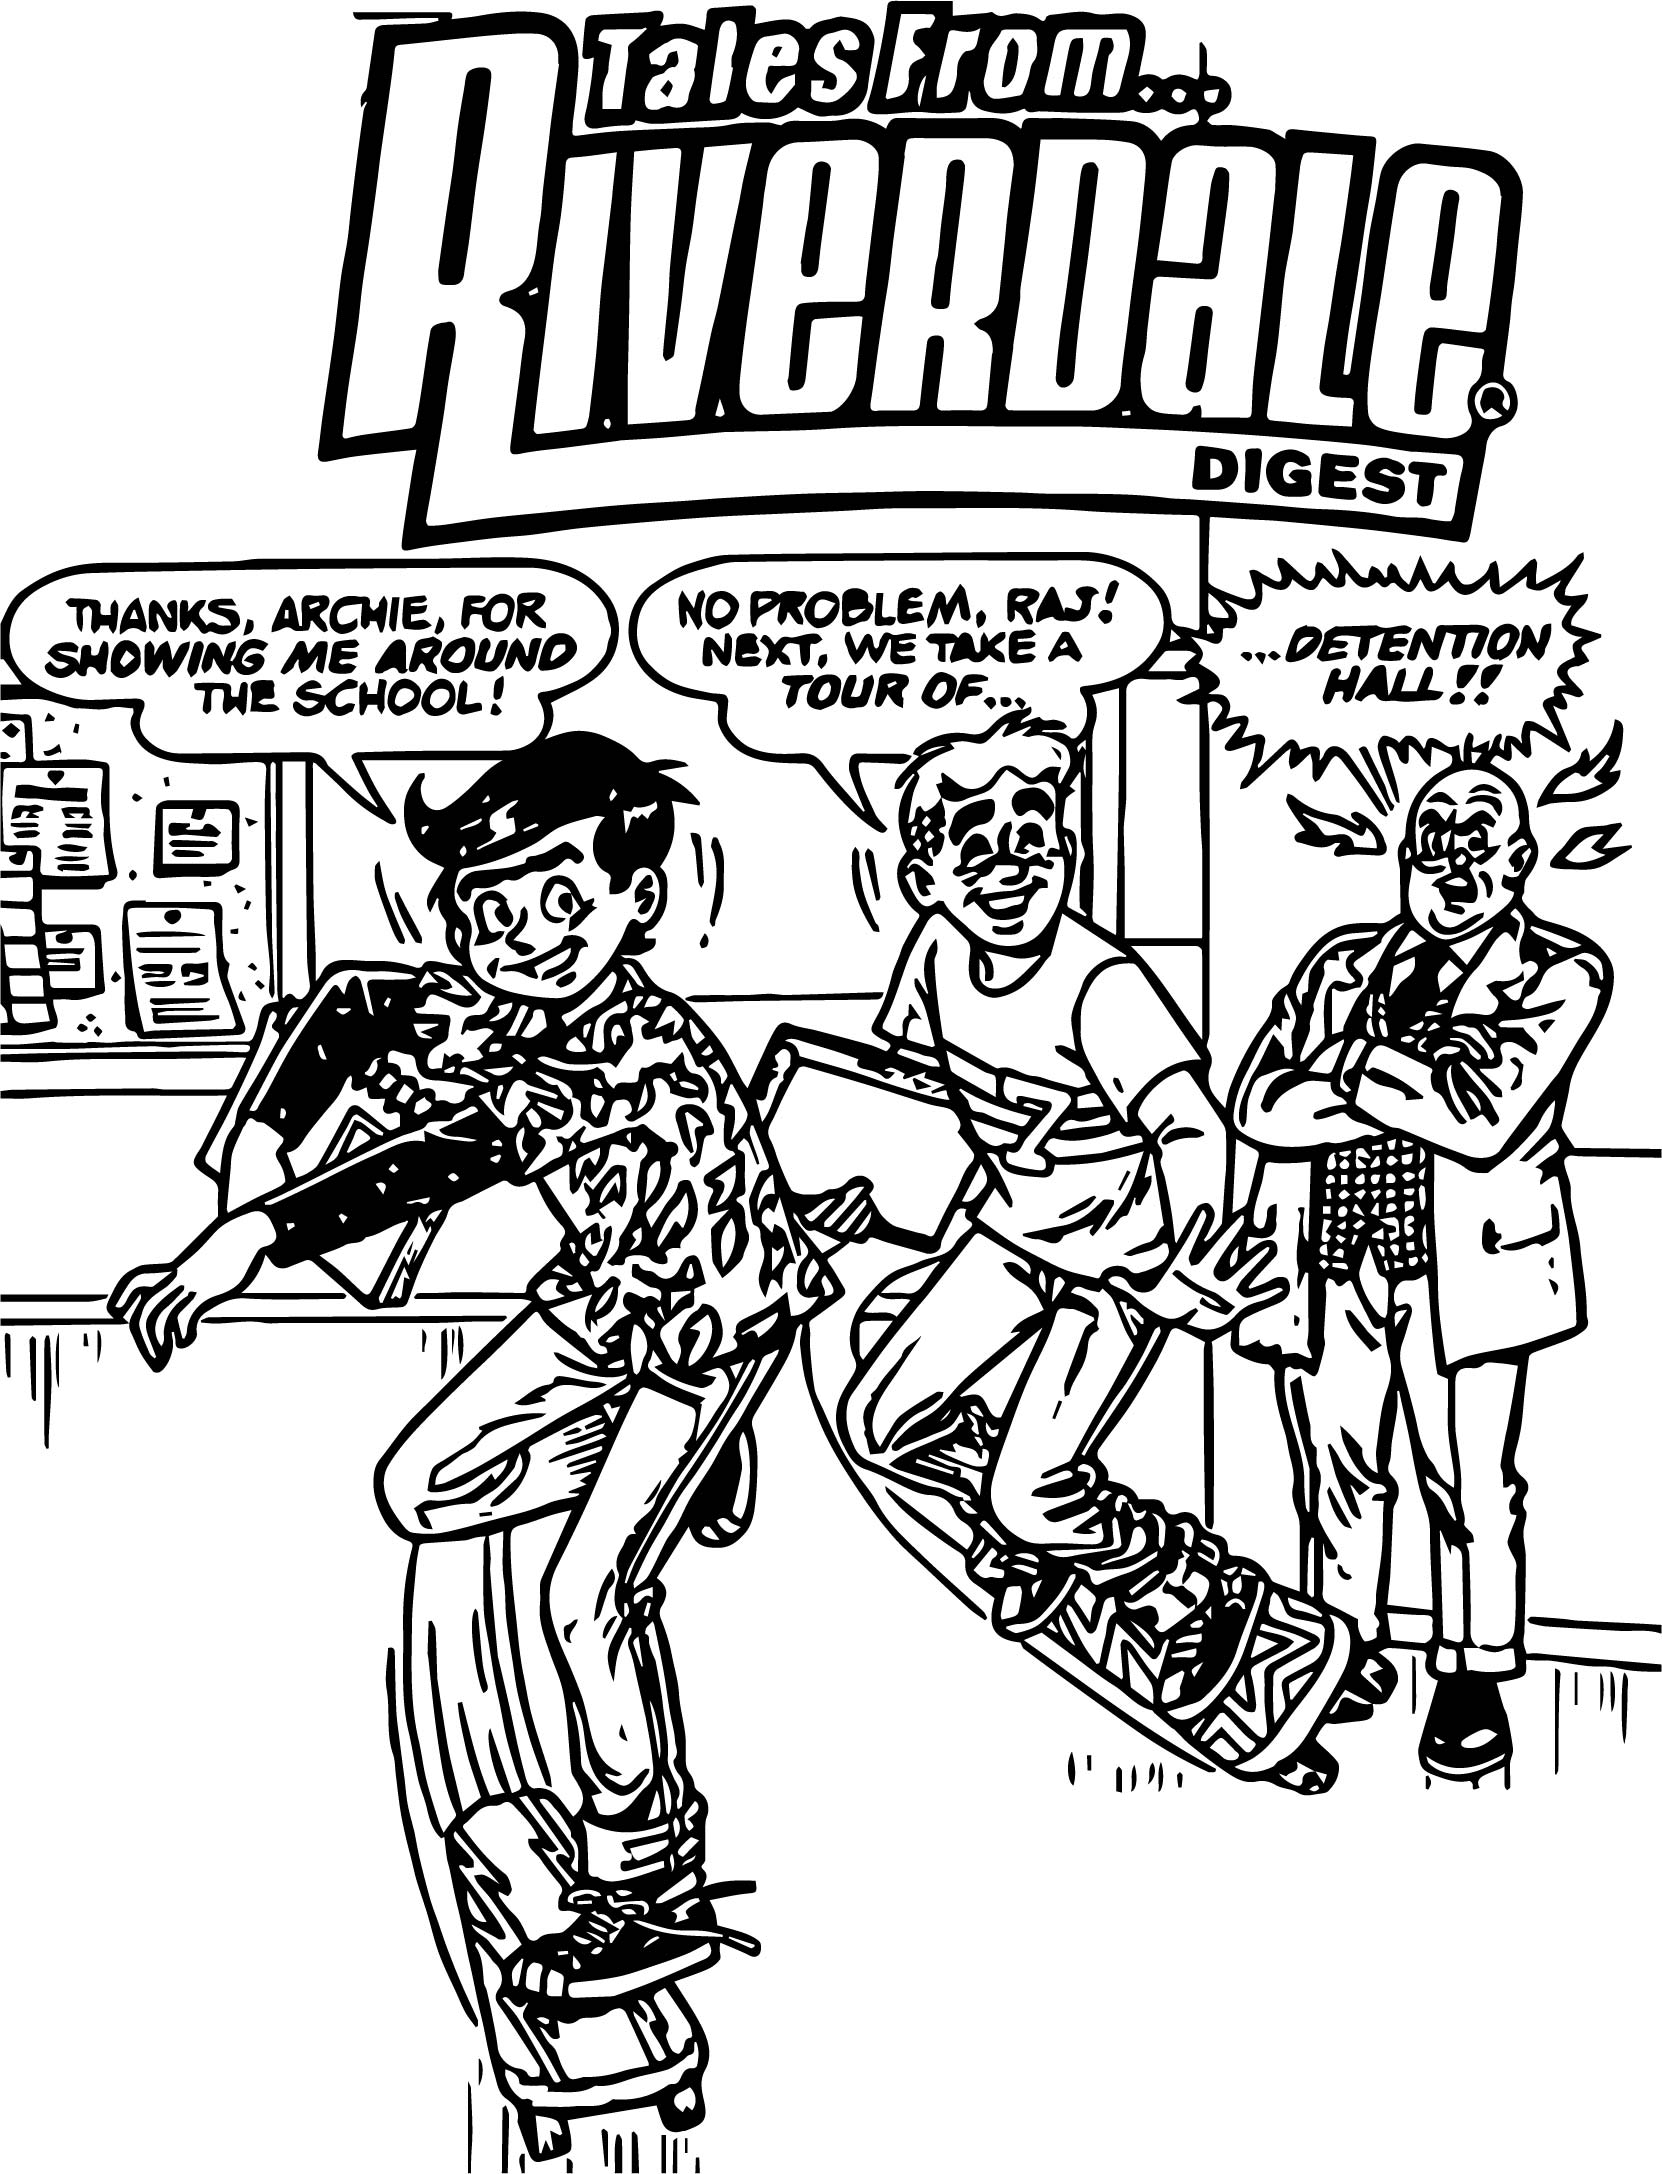 archie-comics-riverdale-coloring-pages-wecoloringpage